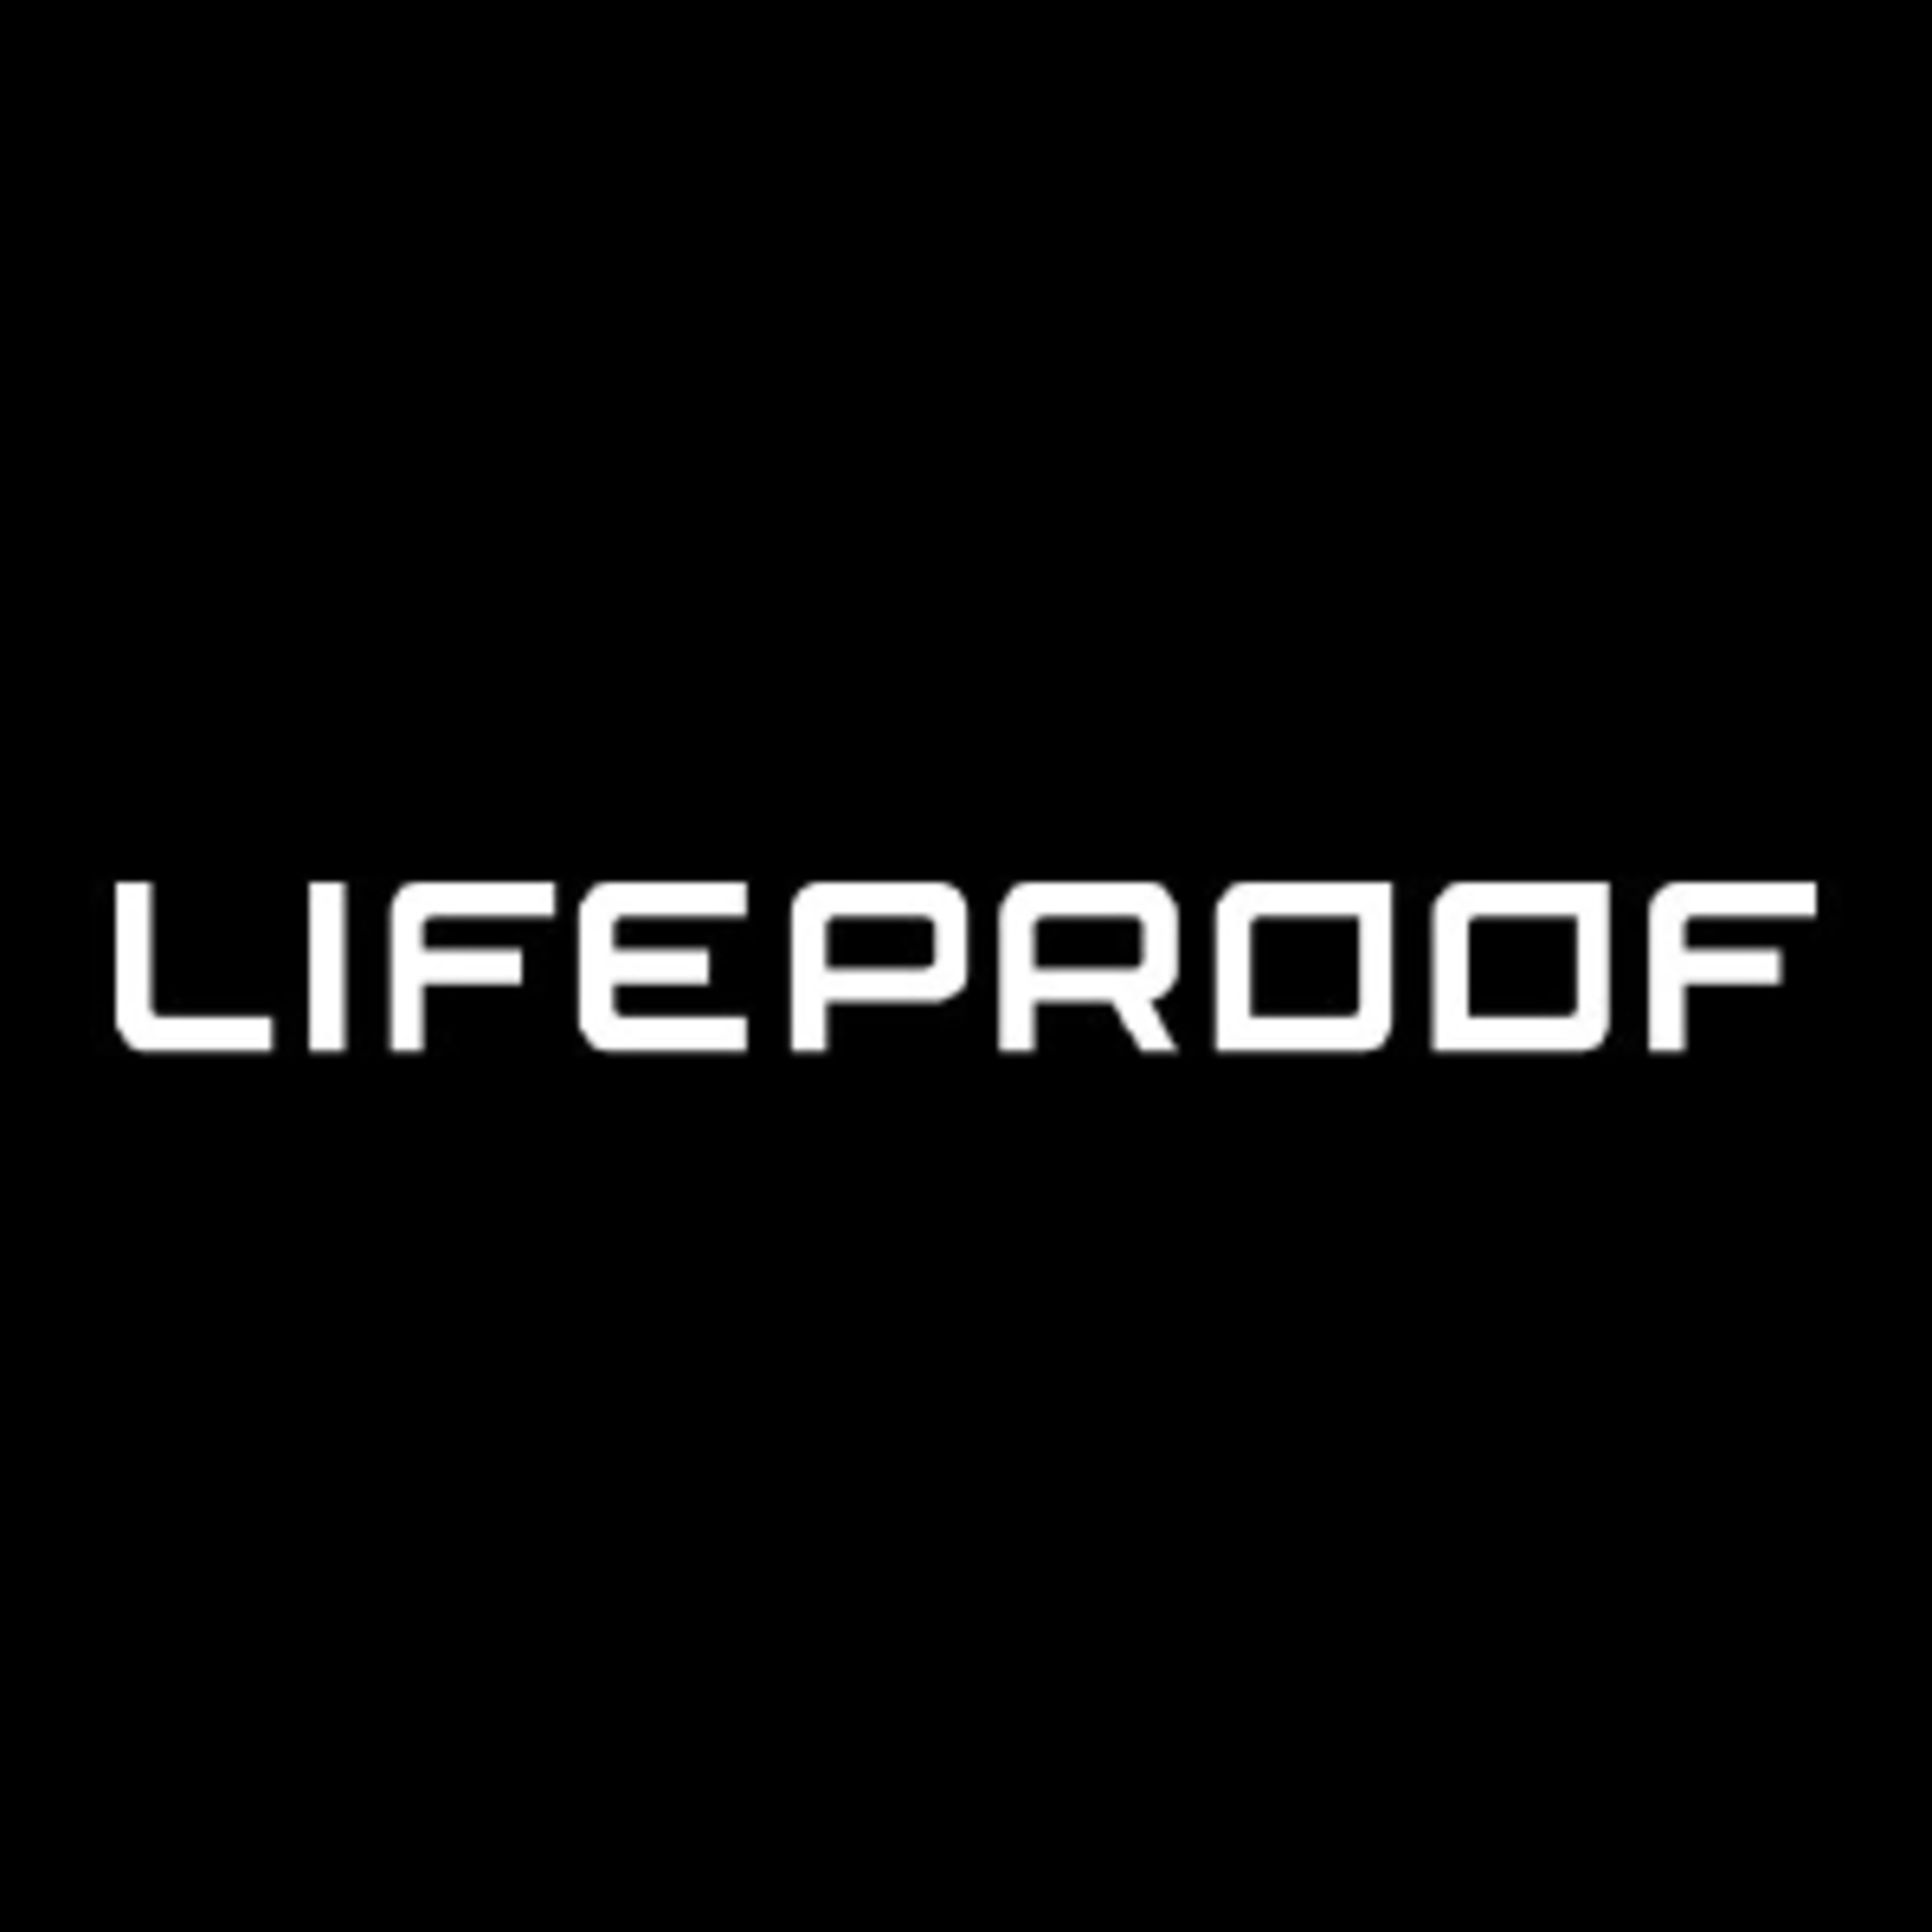 LifeproofCode